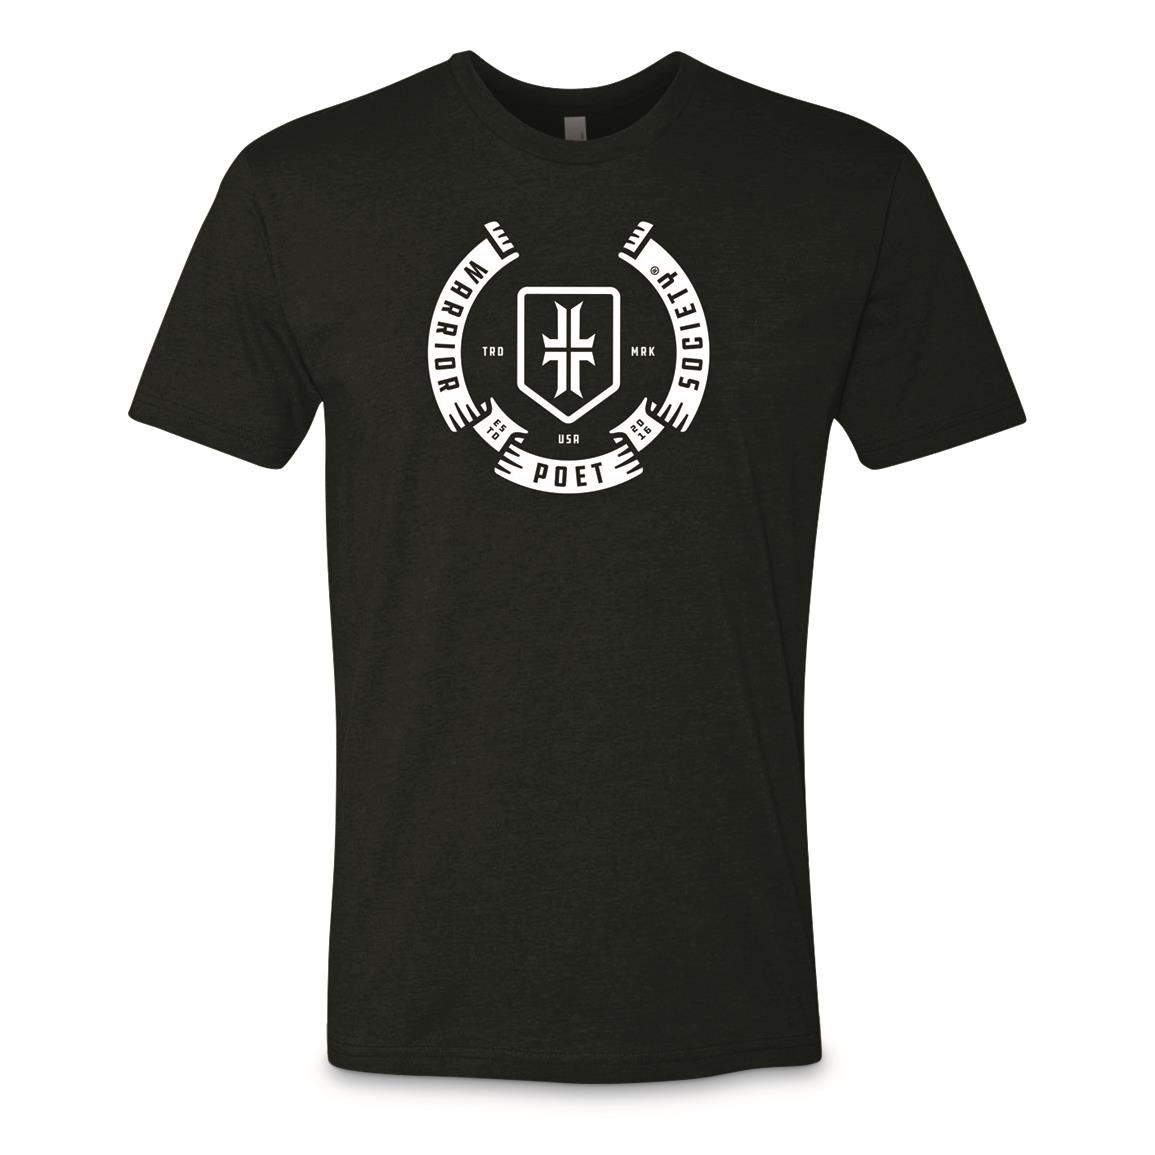 Warrior Poet Society Men's Seal Shirt, Black